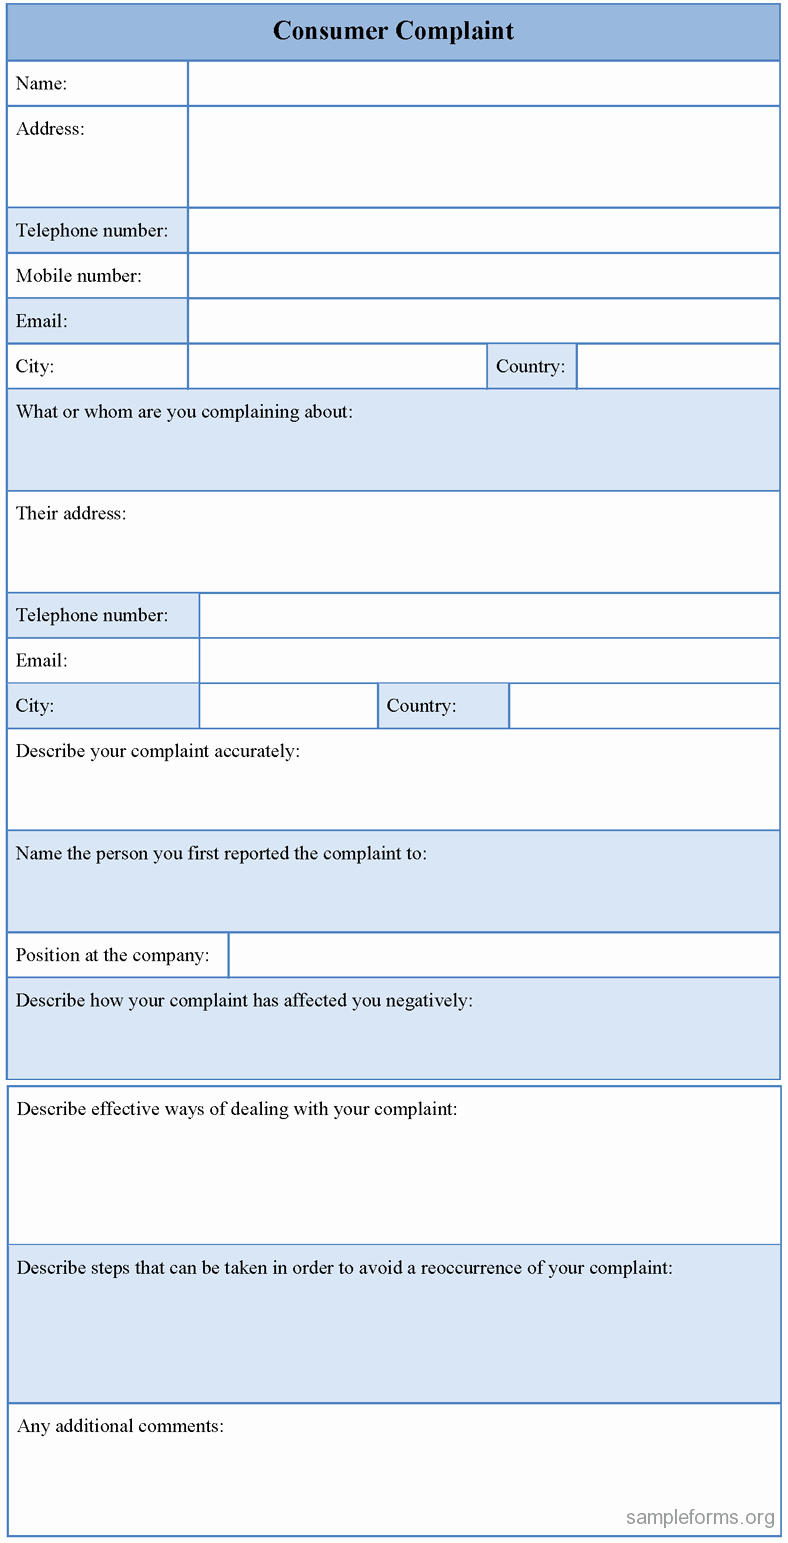 Customer Complaint form Template Unique Customer Plaint form Sample forms